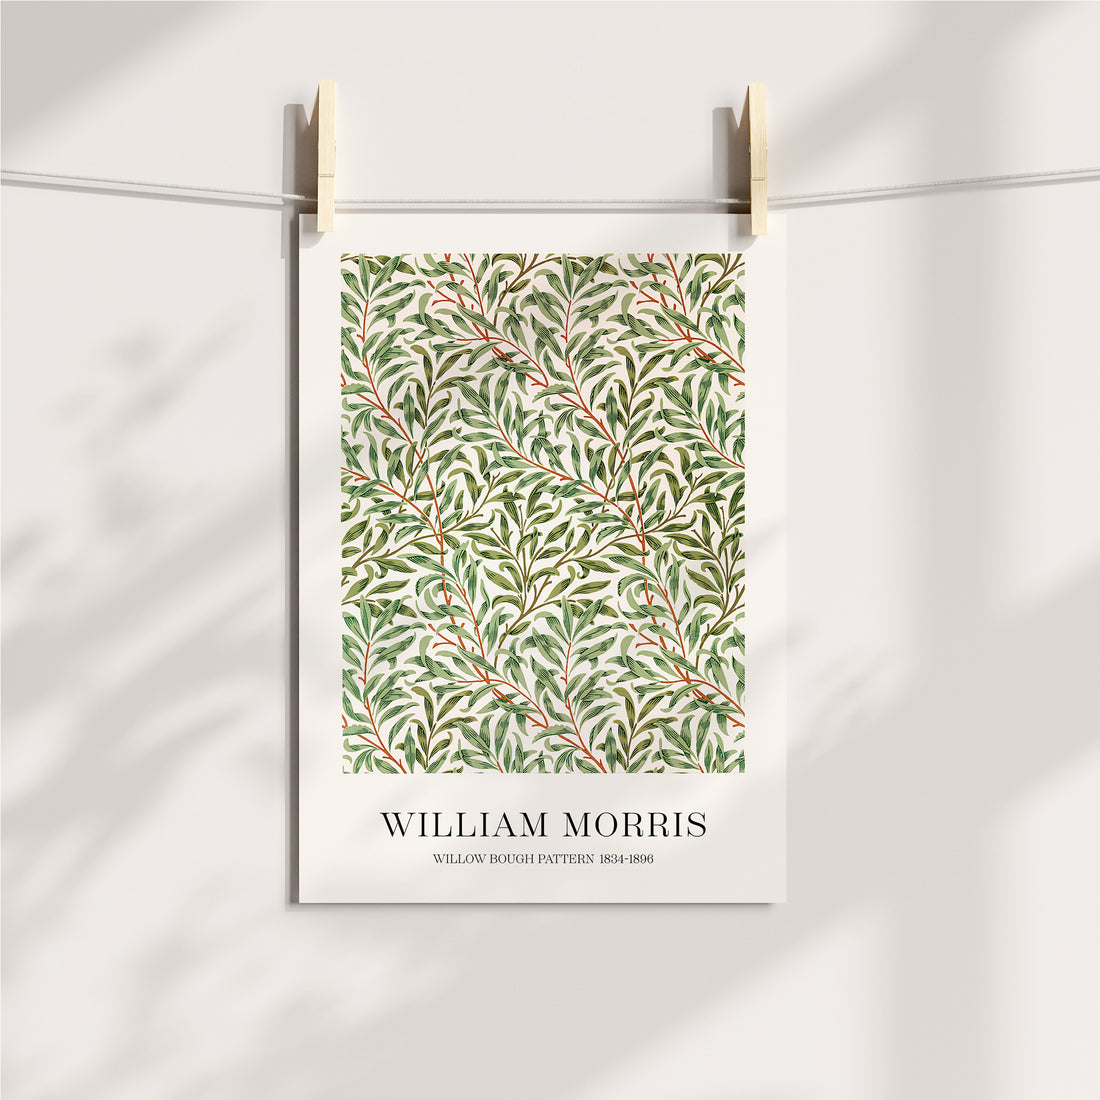 William Morris Willow Bough Pattern Gallery Printable Art